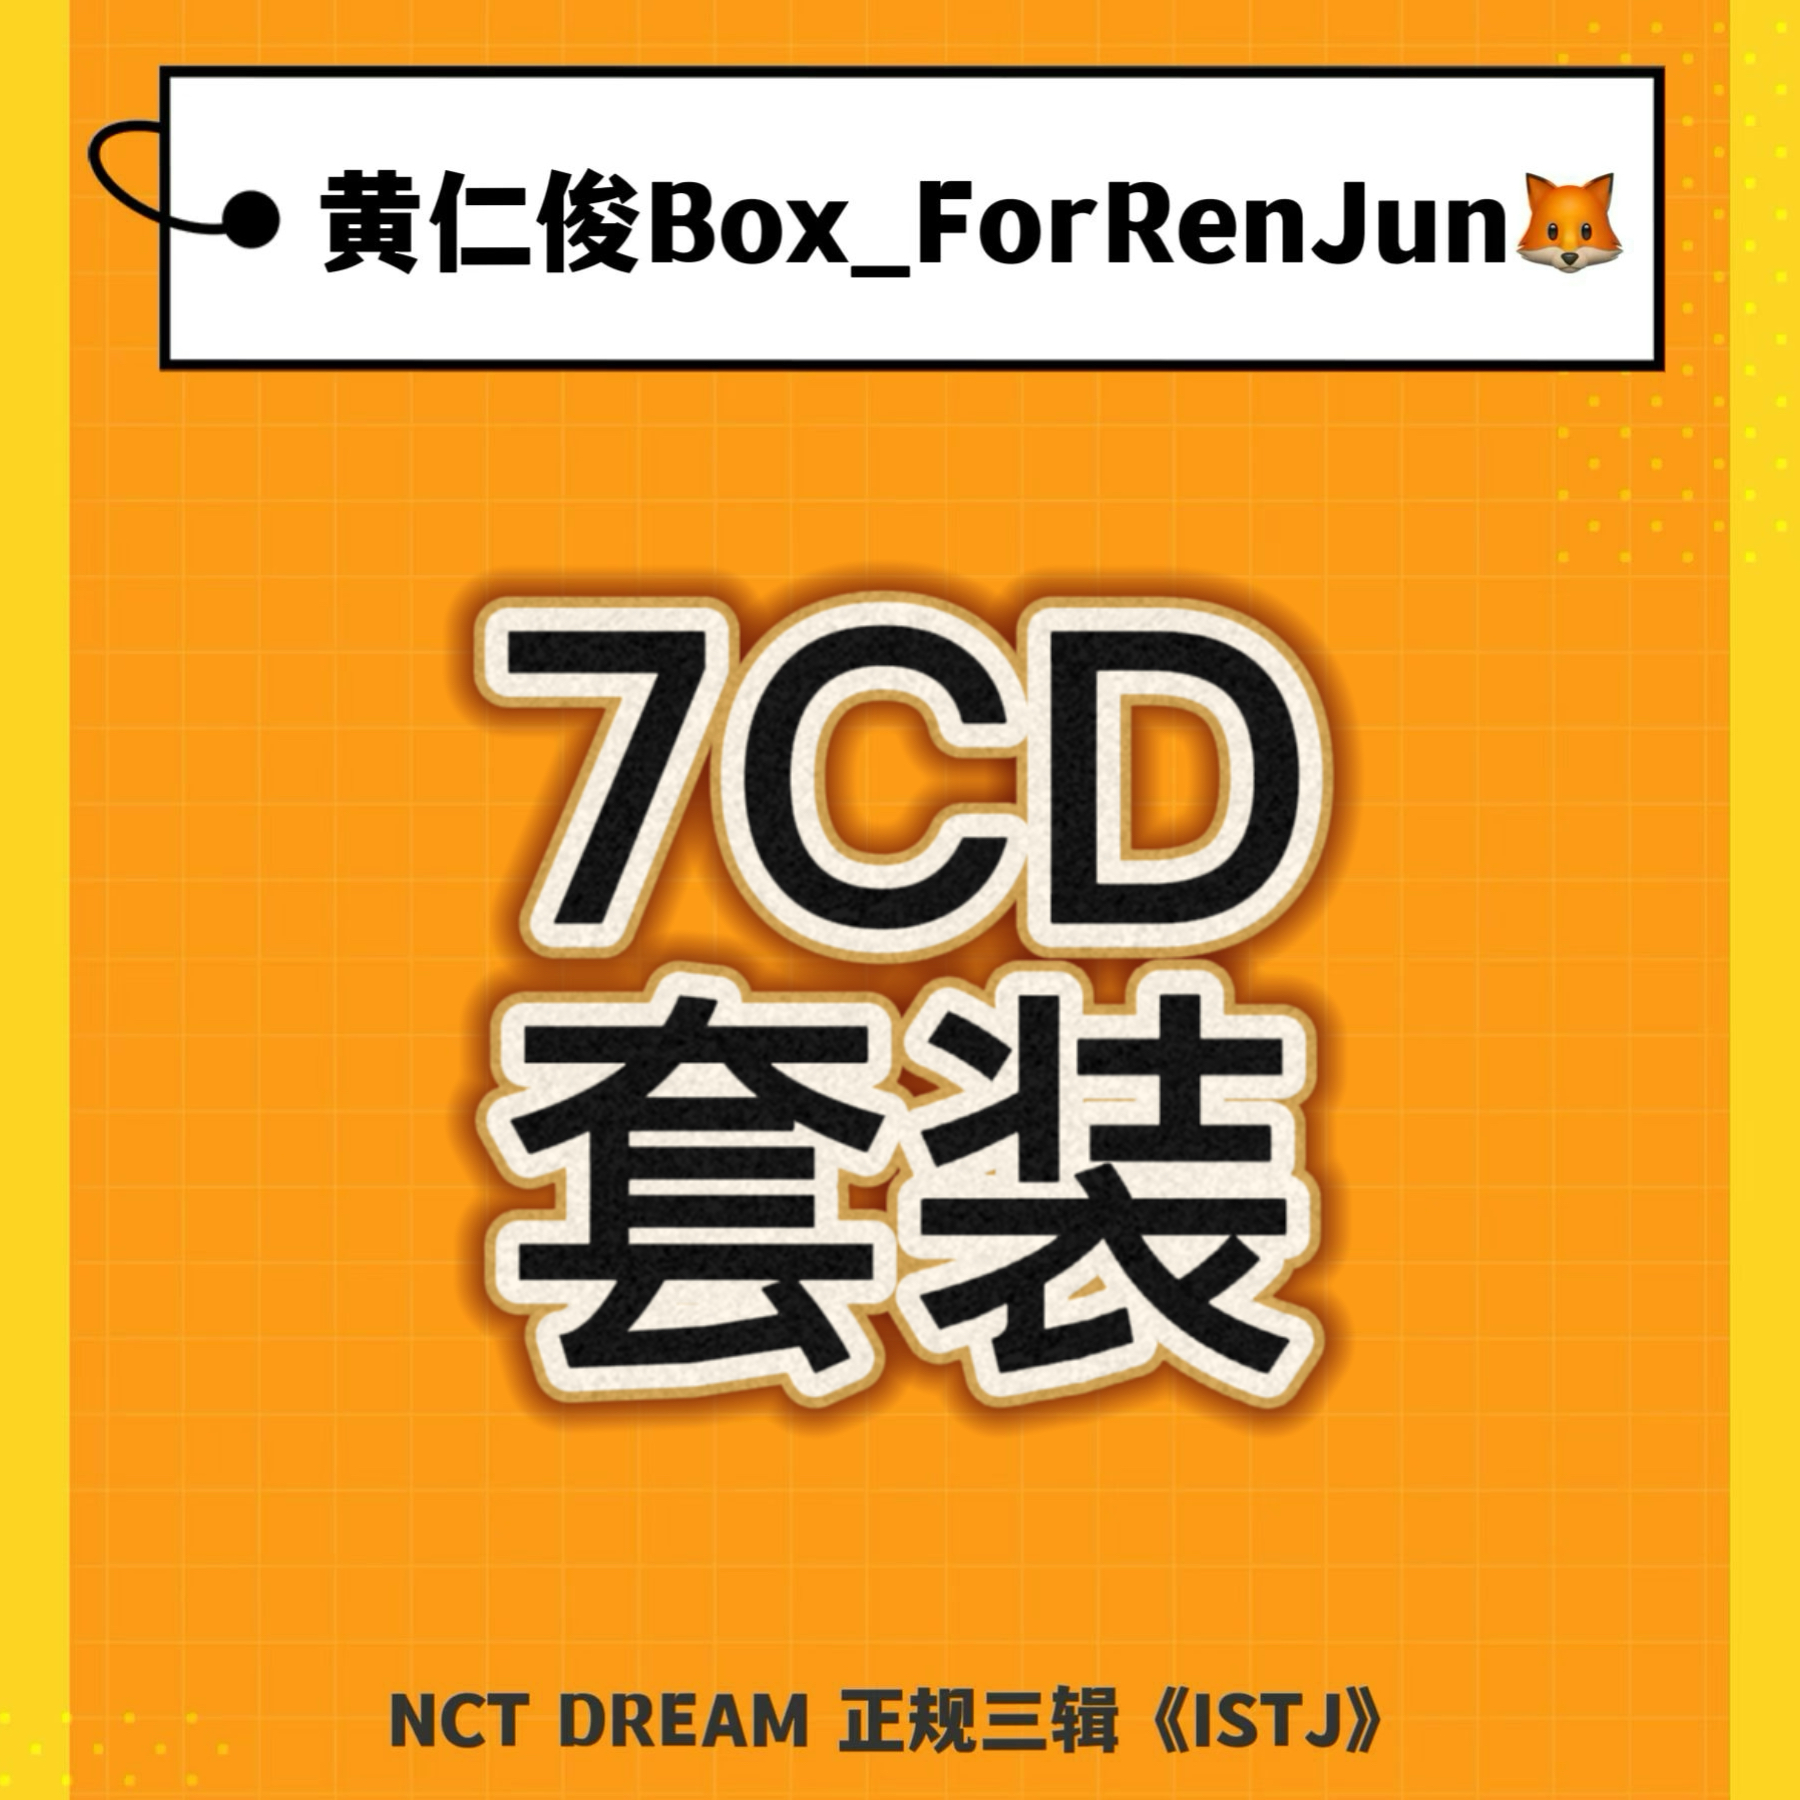 [全款 裸专] [7CD 套装] NCT DREAM - 正规3辑 [ISTJ] (Poster Ver.)_黄仁俊吧RenJunBar